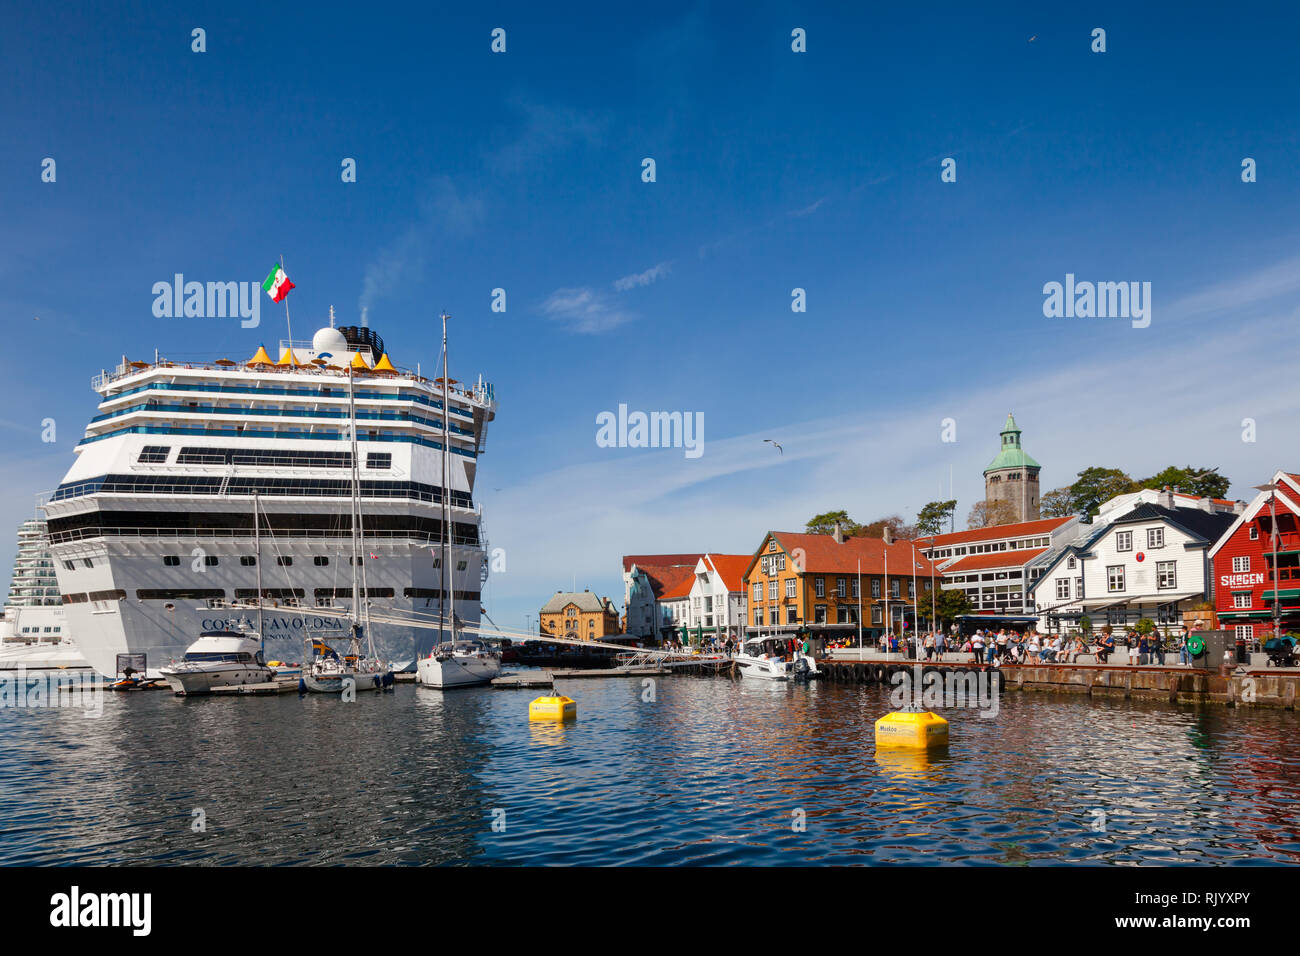 STAVANGER, NORWAY - AUGUST 14, 2018: Costa Favolosa cruise ship moored at Skagenkaien pier in Vagen Harbour of Old Stavanger, a popular tourist destin Stock Photo